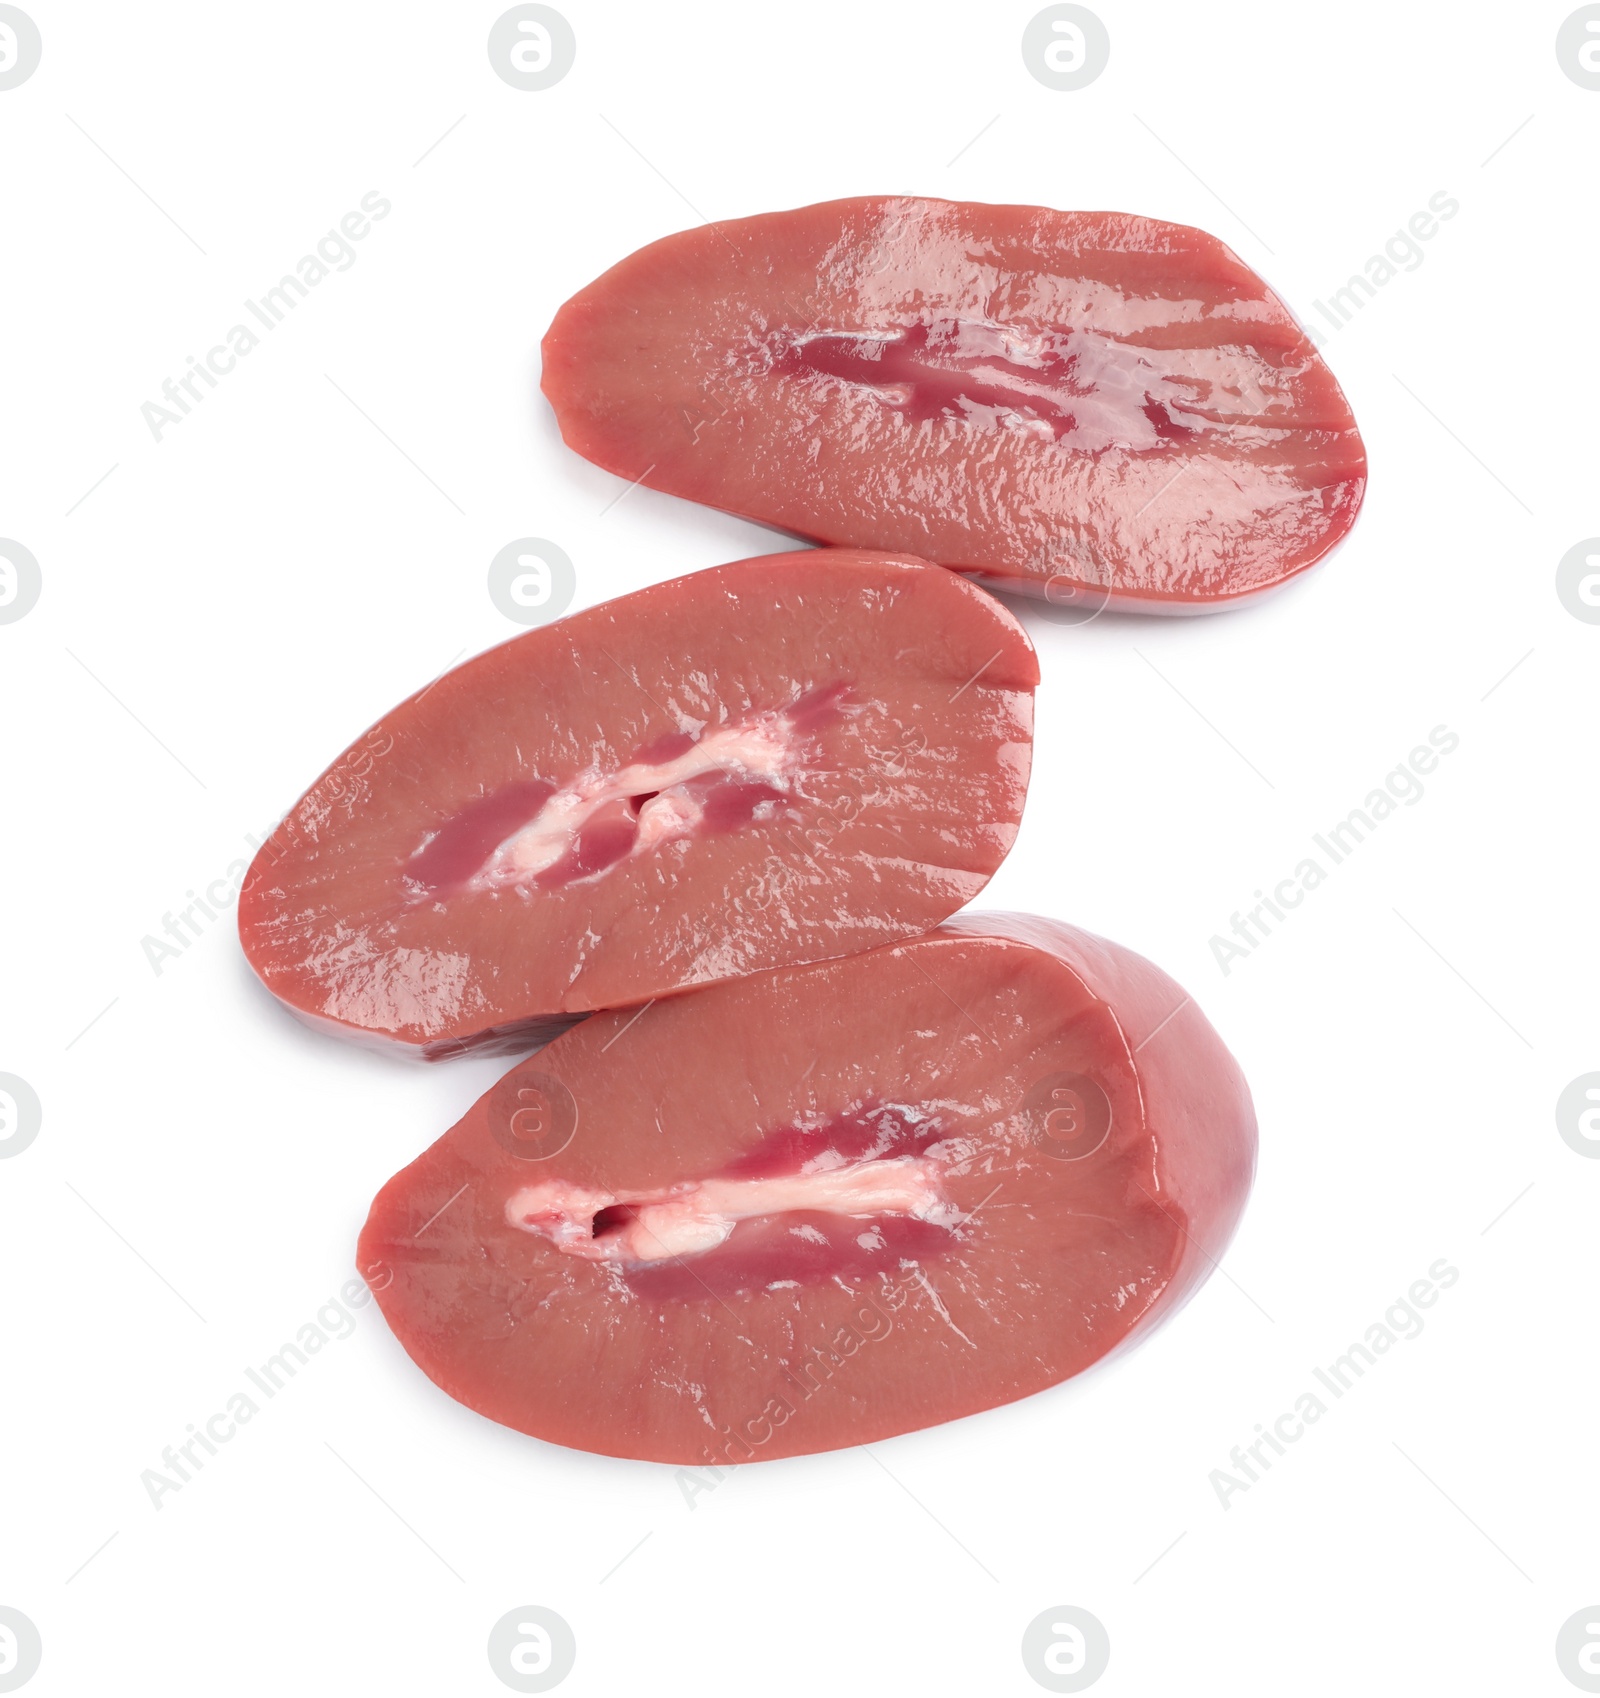 Photo of Cut fresh raw pork kidney on white background, top view